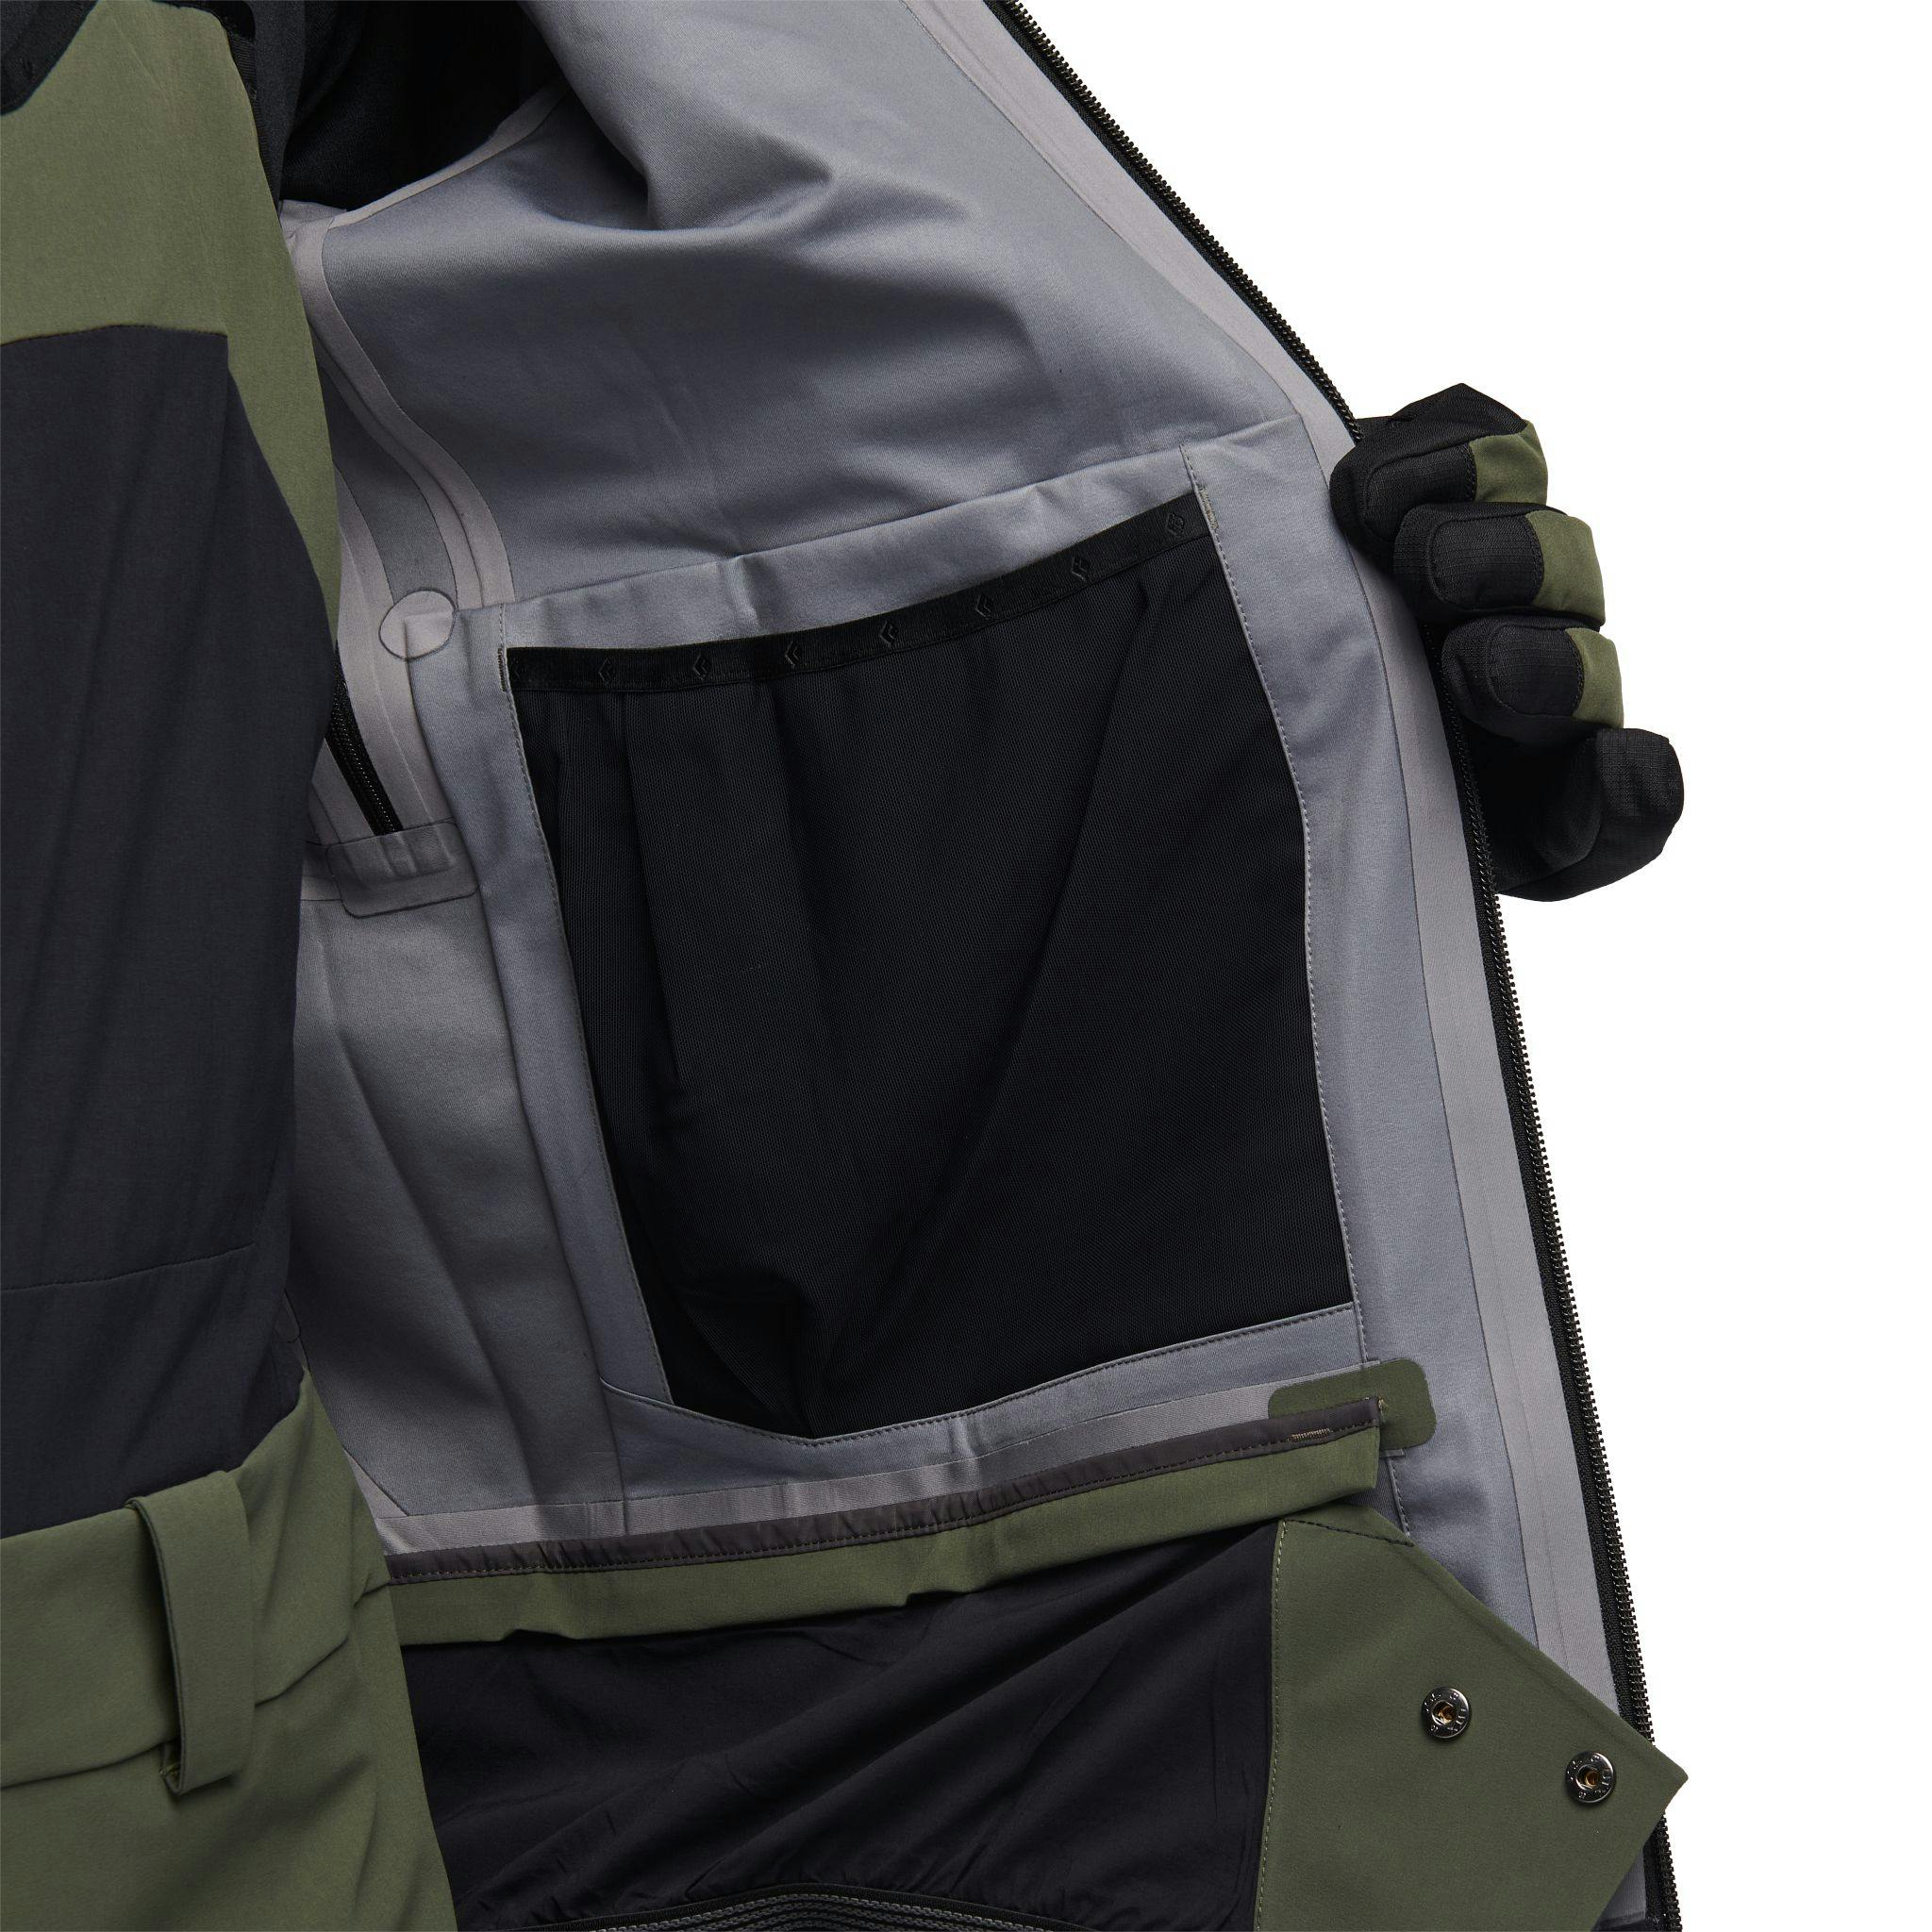 Recon Pro detail shot of internal mesh drop pockets